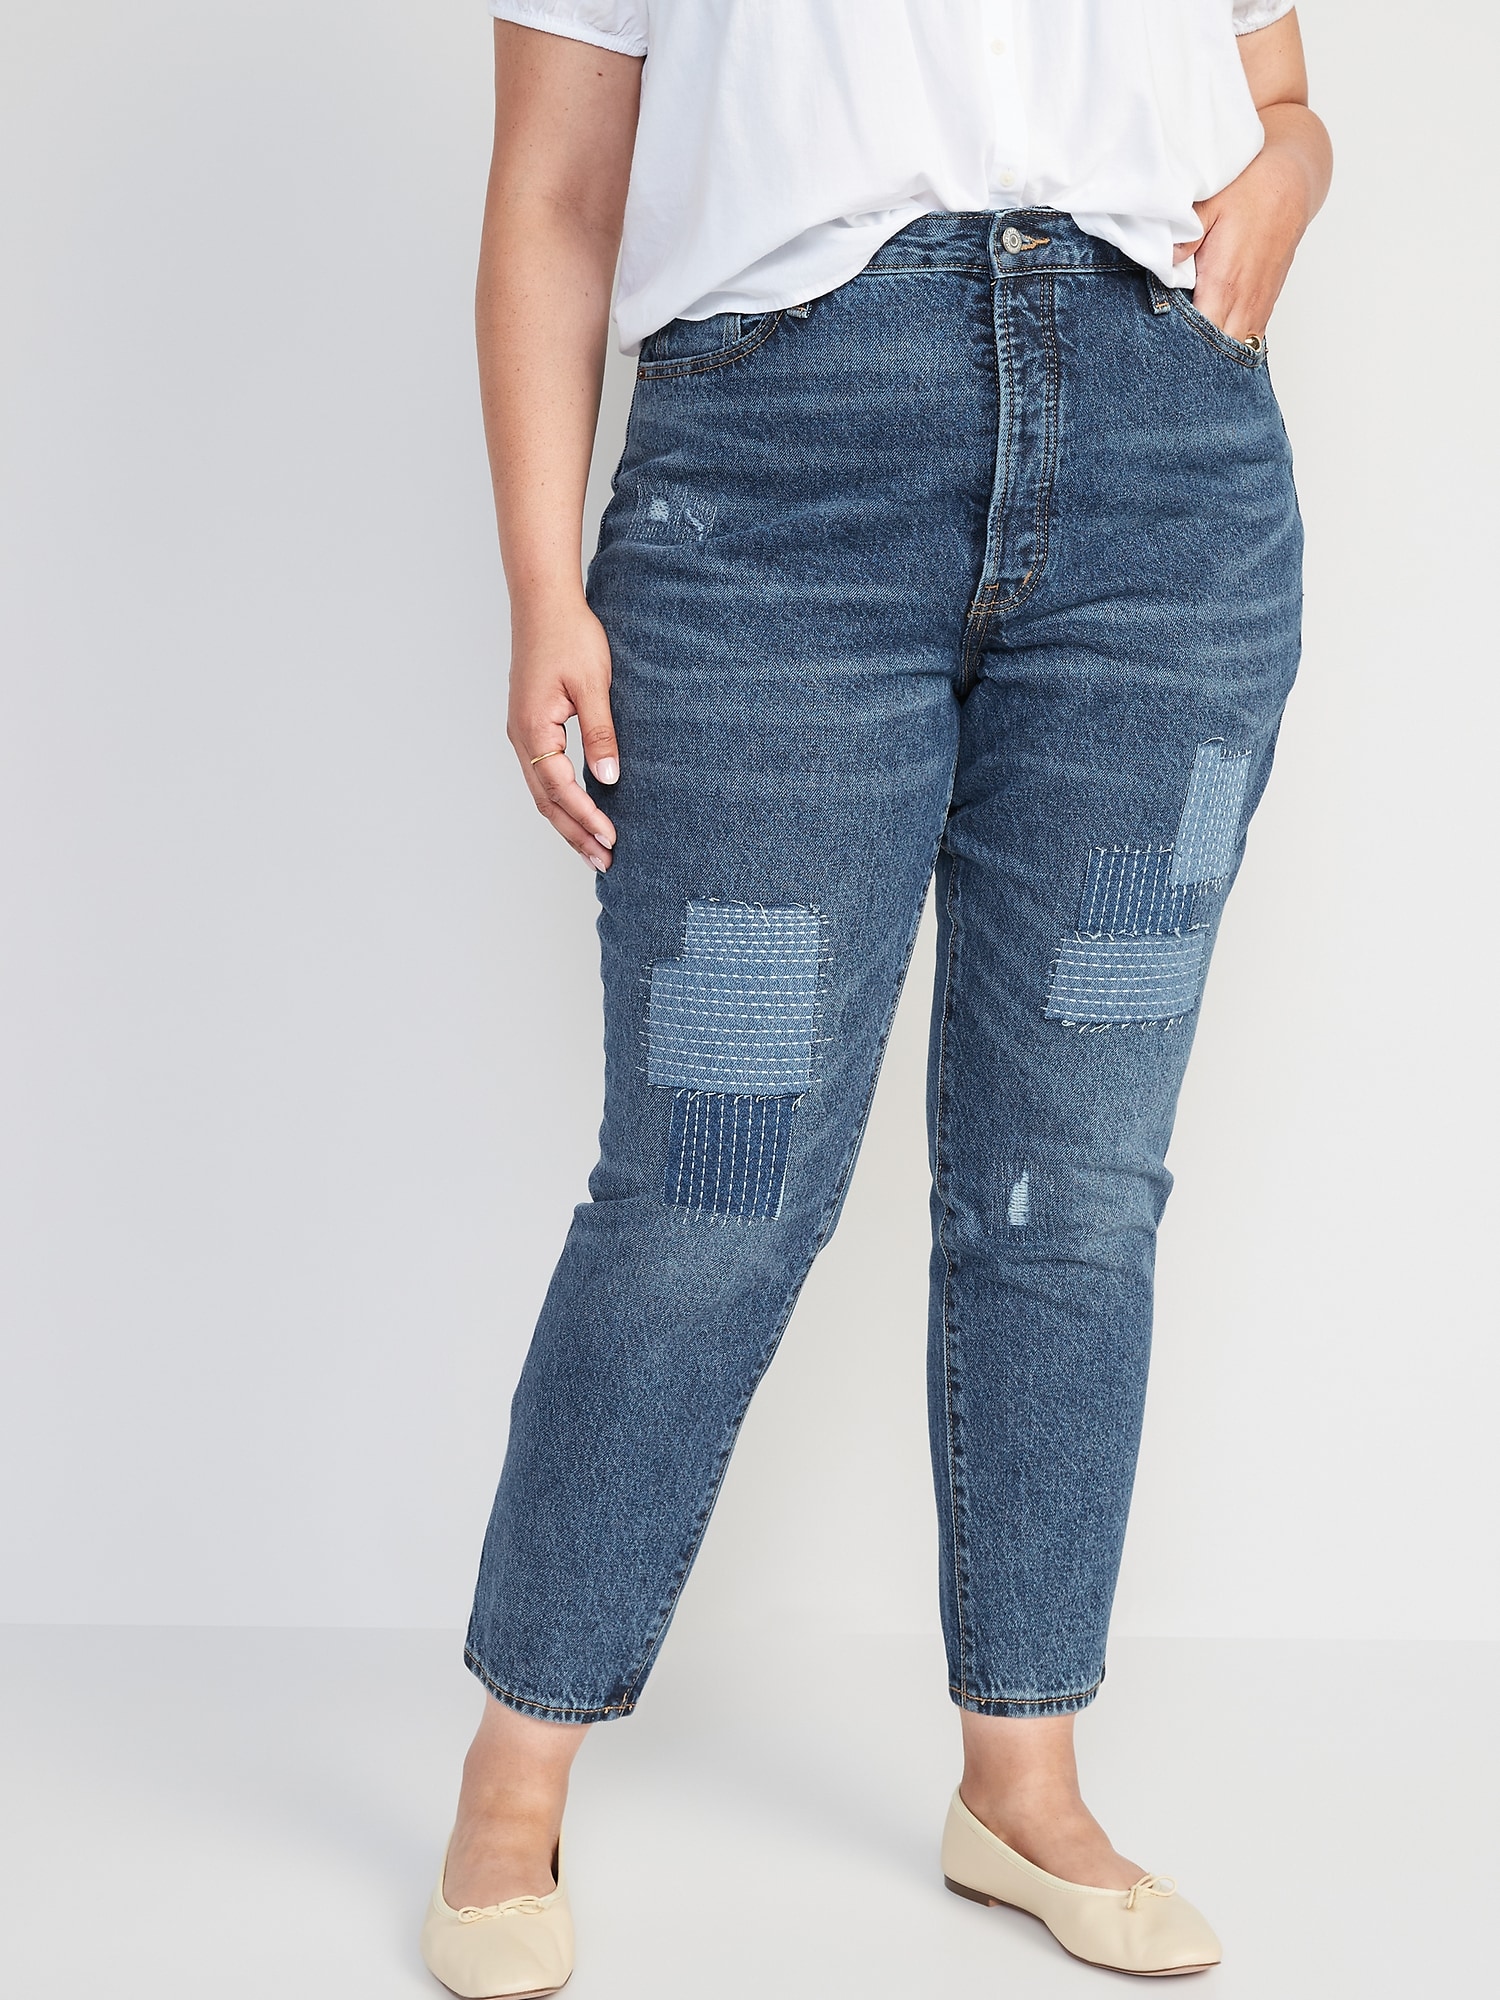 Felcia Women Patchwork Jeans High Waist Zipper Straight Denim Pants  Streetwear Trousers 